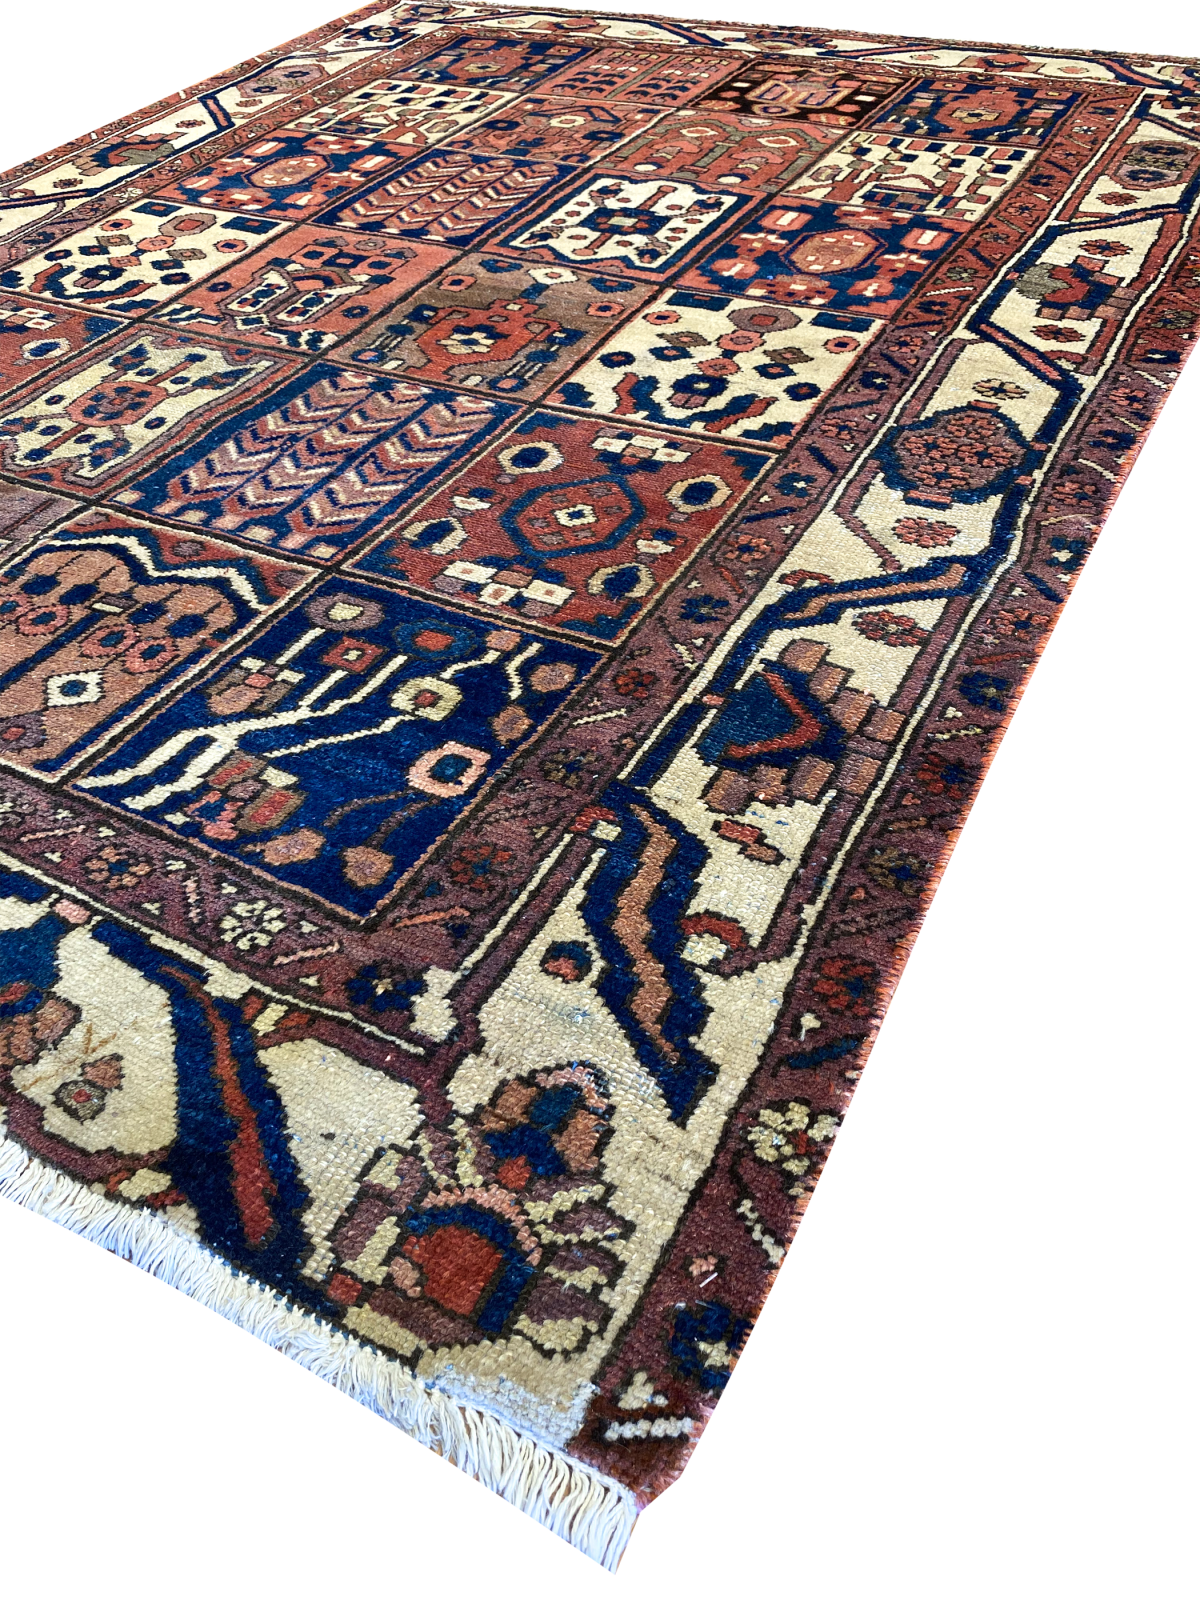 Antique Persian Bakhtiari 5' x 6' 6" Handmade Wool Area Rug - Shabahang Royal Carpet